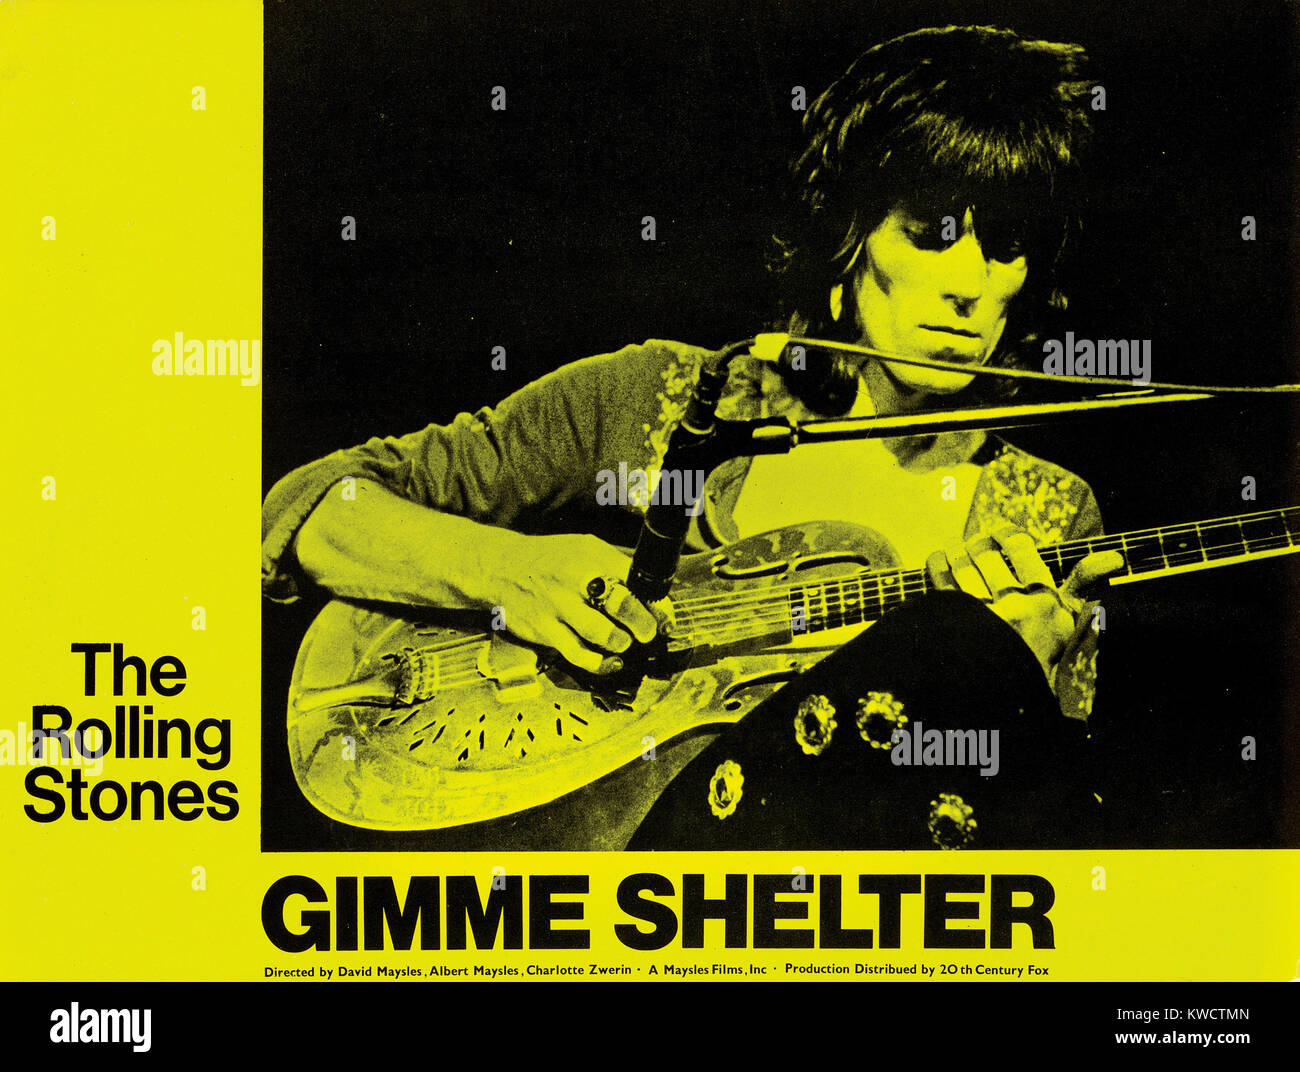 Stones gimme shelter. Rolling Stones "Gimme Shelter". Pain Gimme Shelter. Gimme Shelter 1970. R̲olling S̲tones Gimme Shelter.